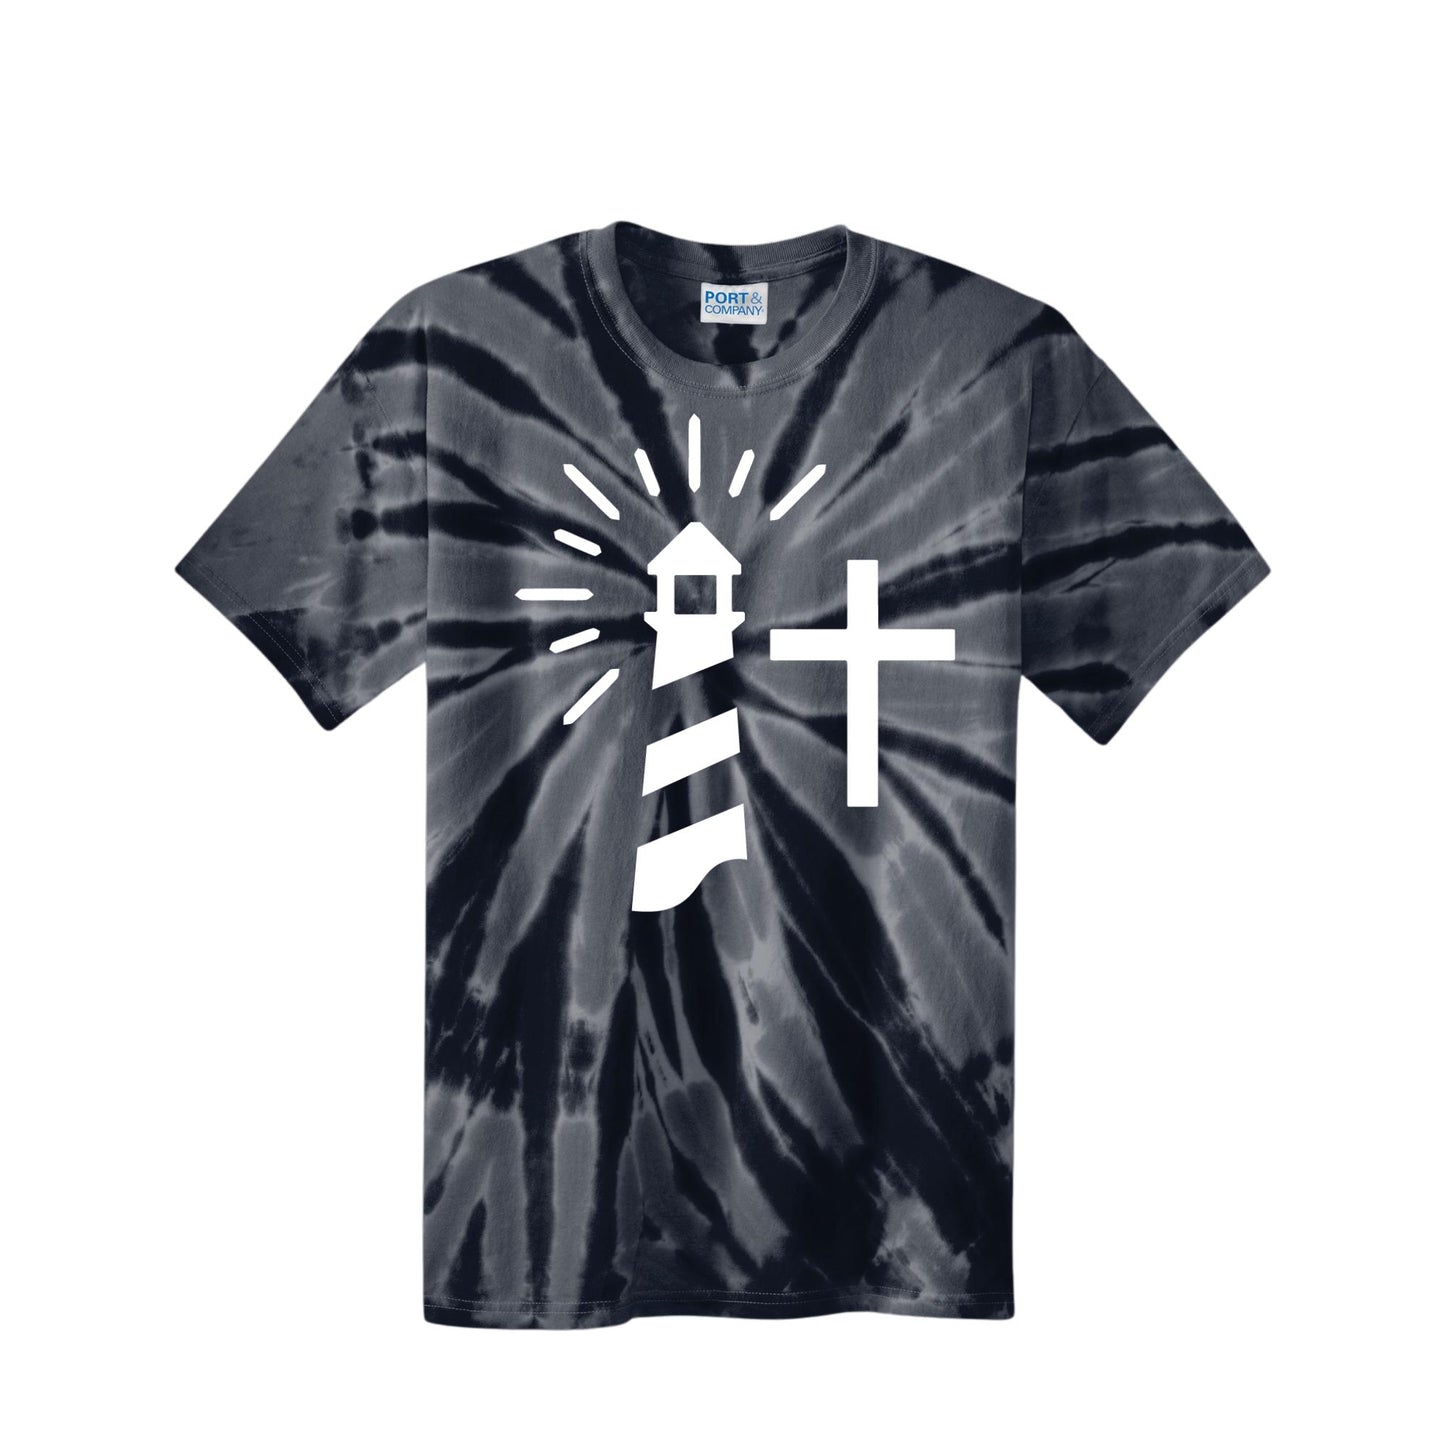 DTG Print 2 | Youth Tie-Dye T-Shirt | Immanuel Baptist Church